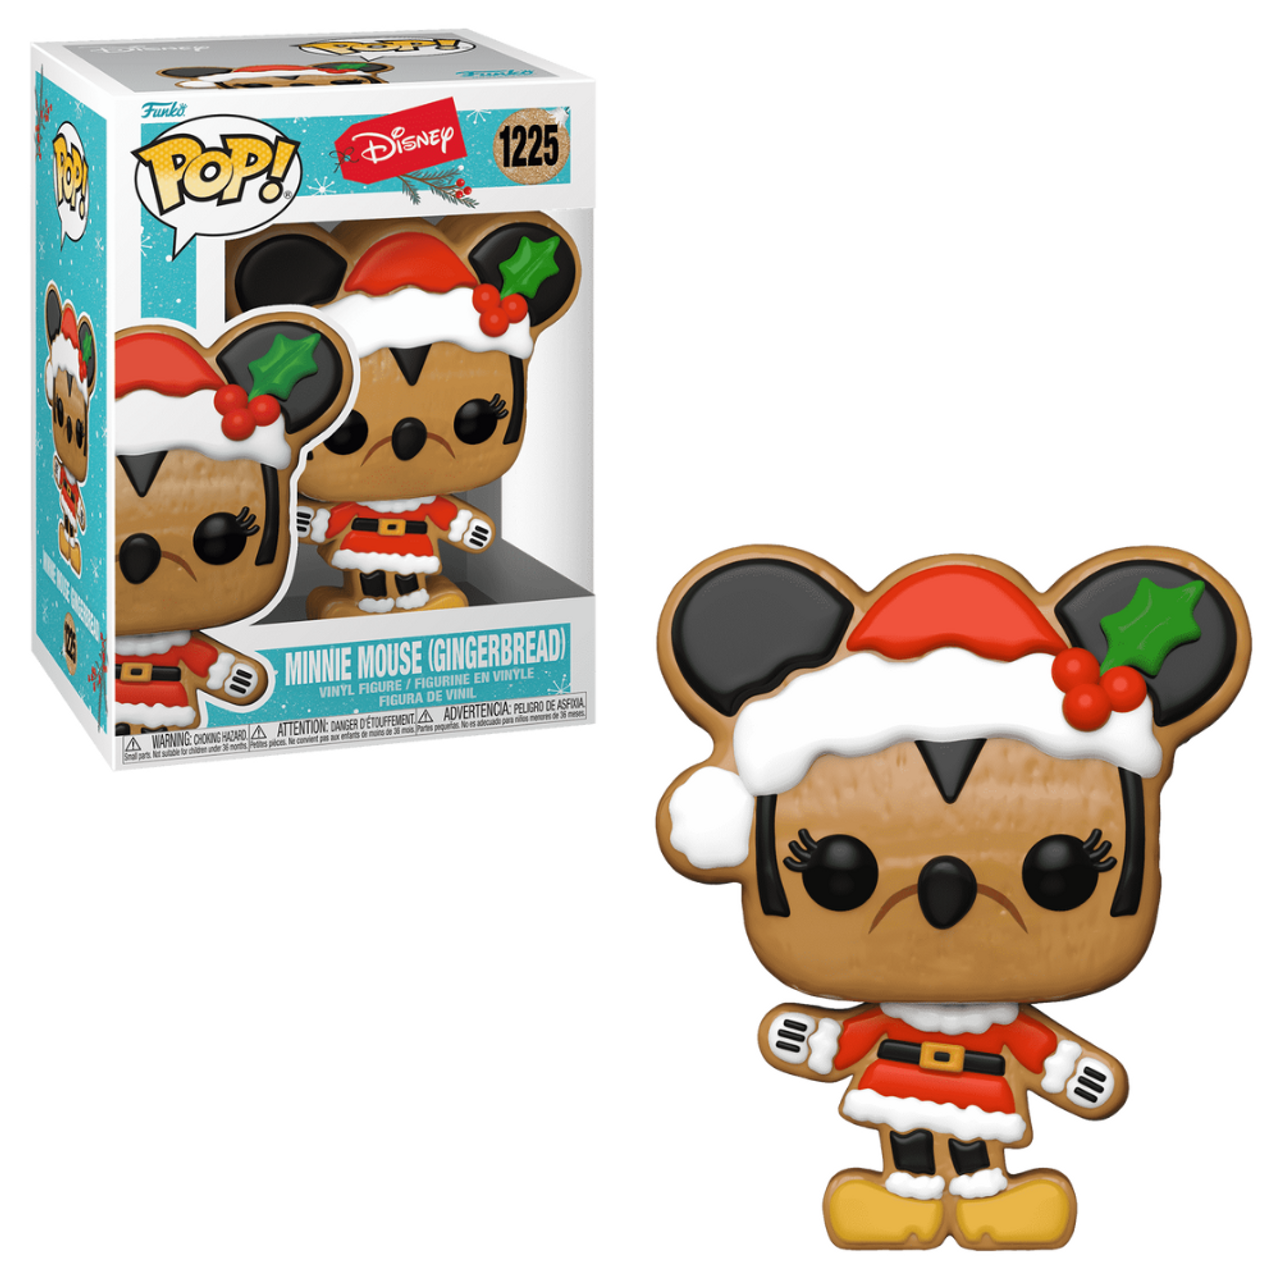 Funko POP! Disney - Minnie Mouse (Gingerbread) #1225 Vinyl Figure